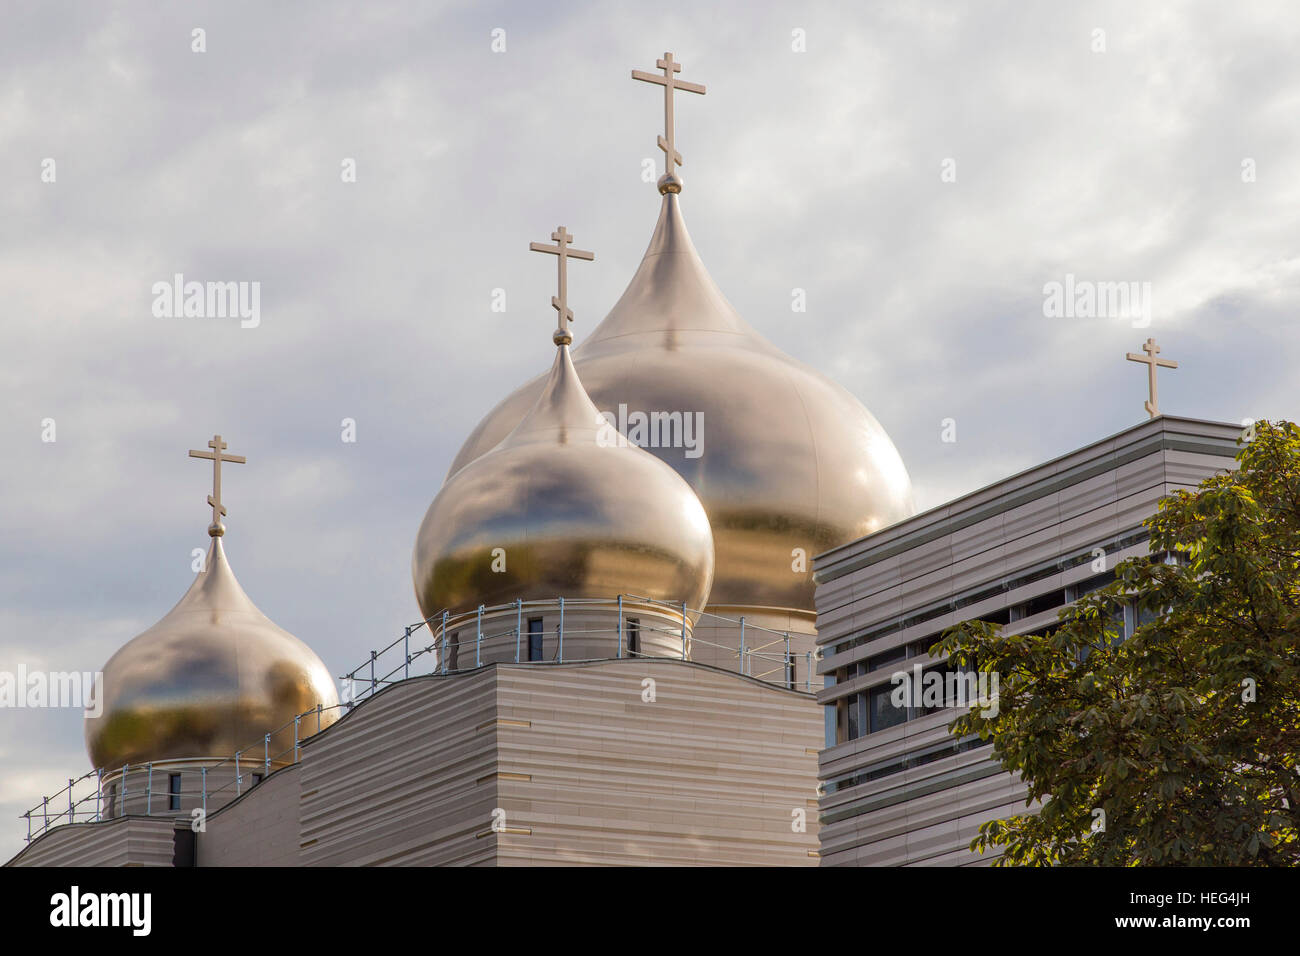 Russian Orthodox Cathedral, Centre spirituel et culturel orthodoxe russe, Quai Branly, Paris, France Stock Photo